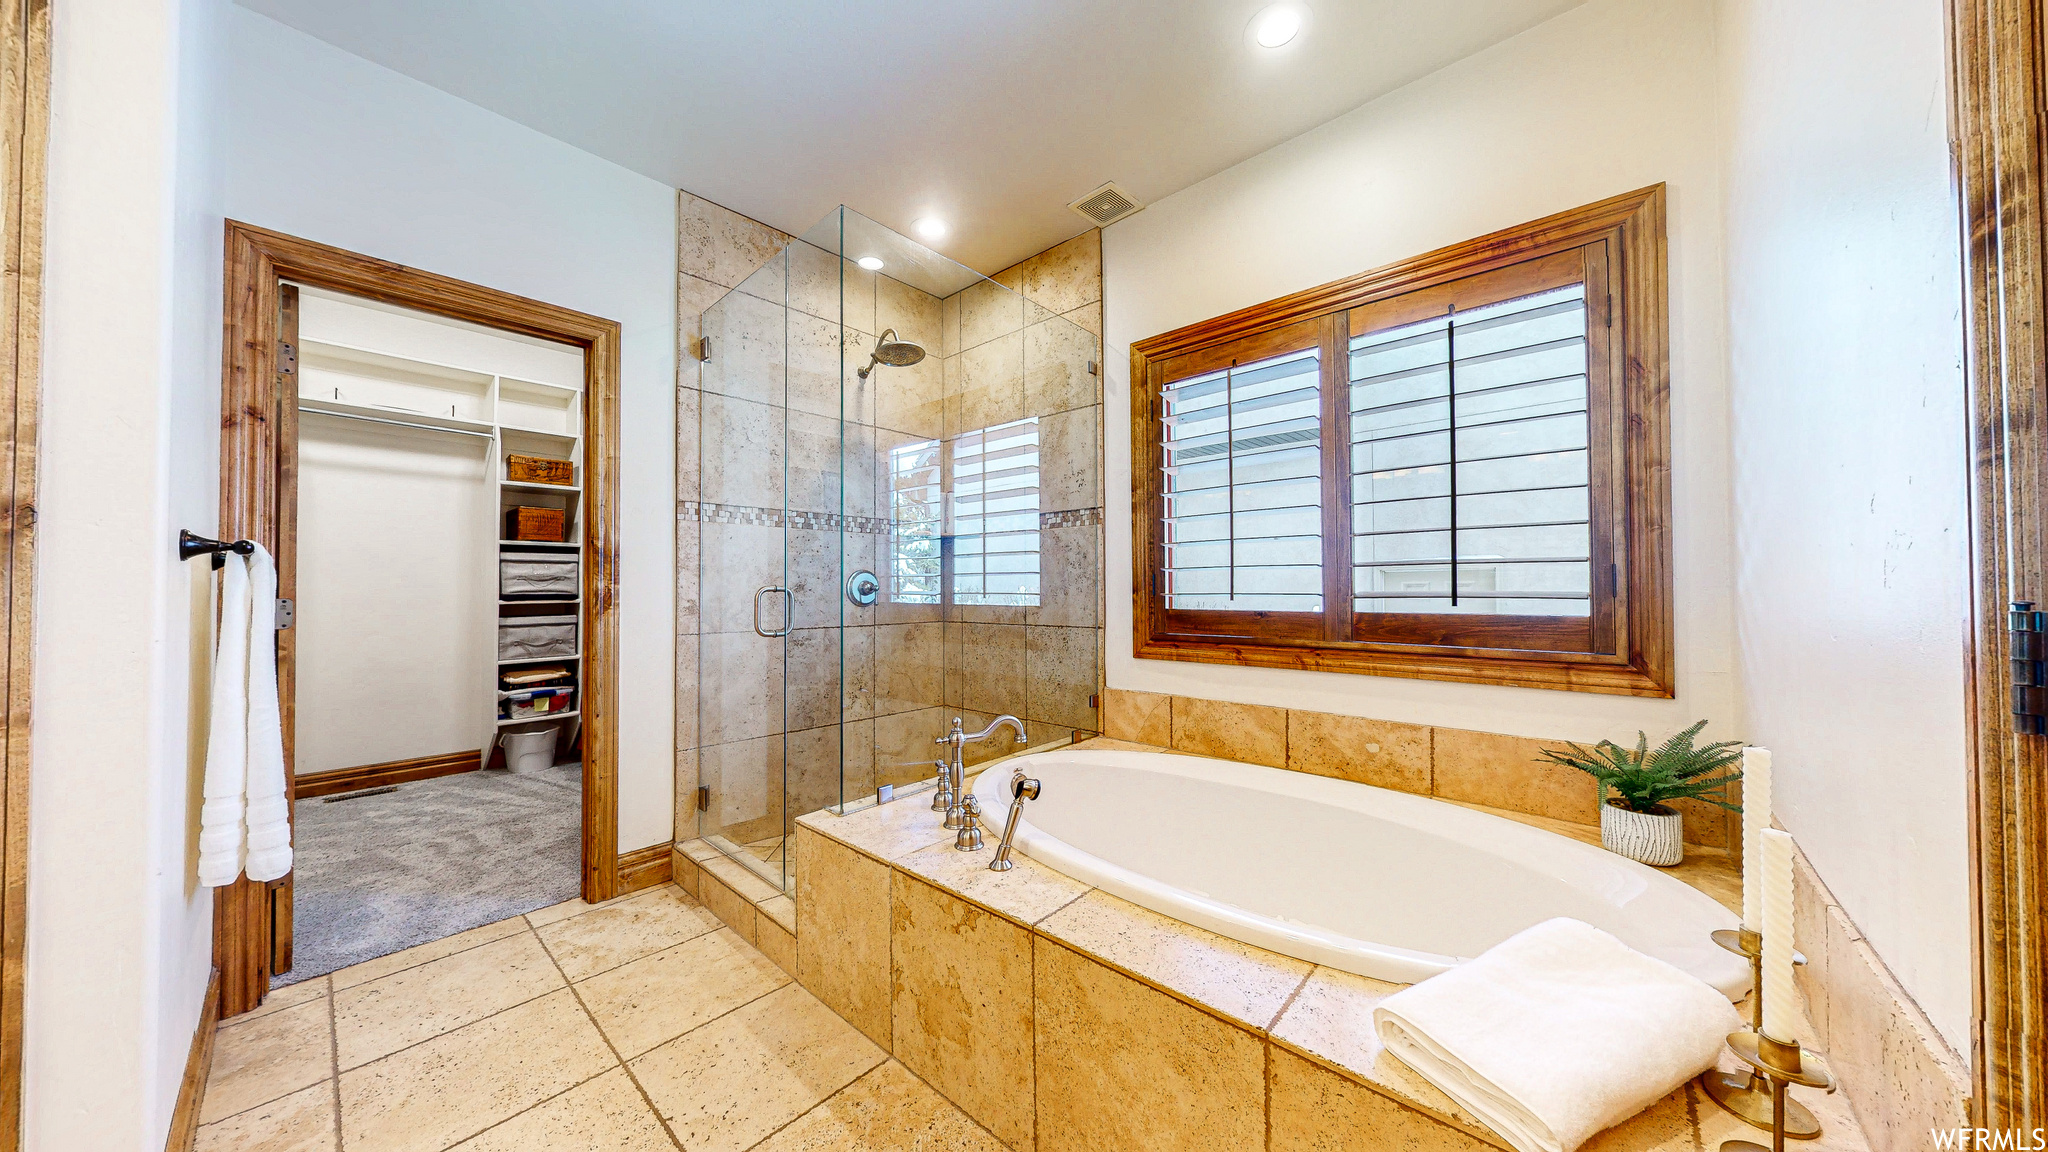 Separate tub, shower, & water closet.